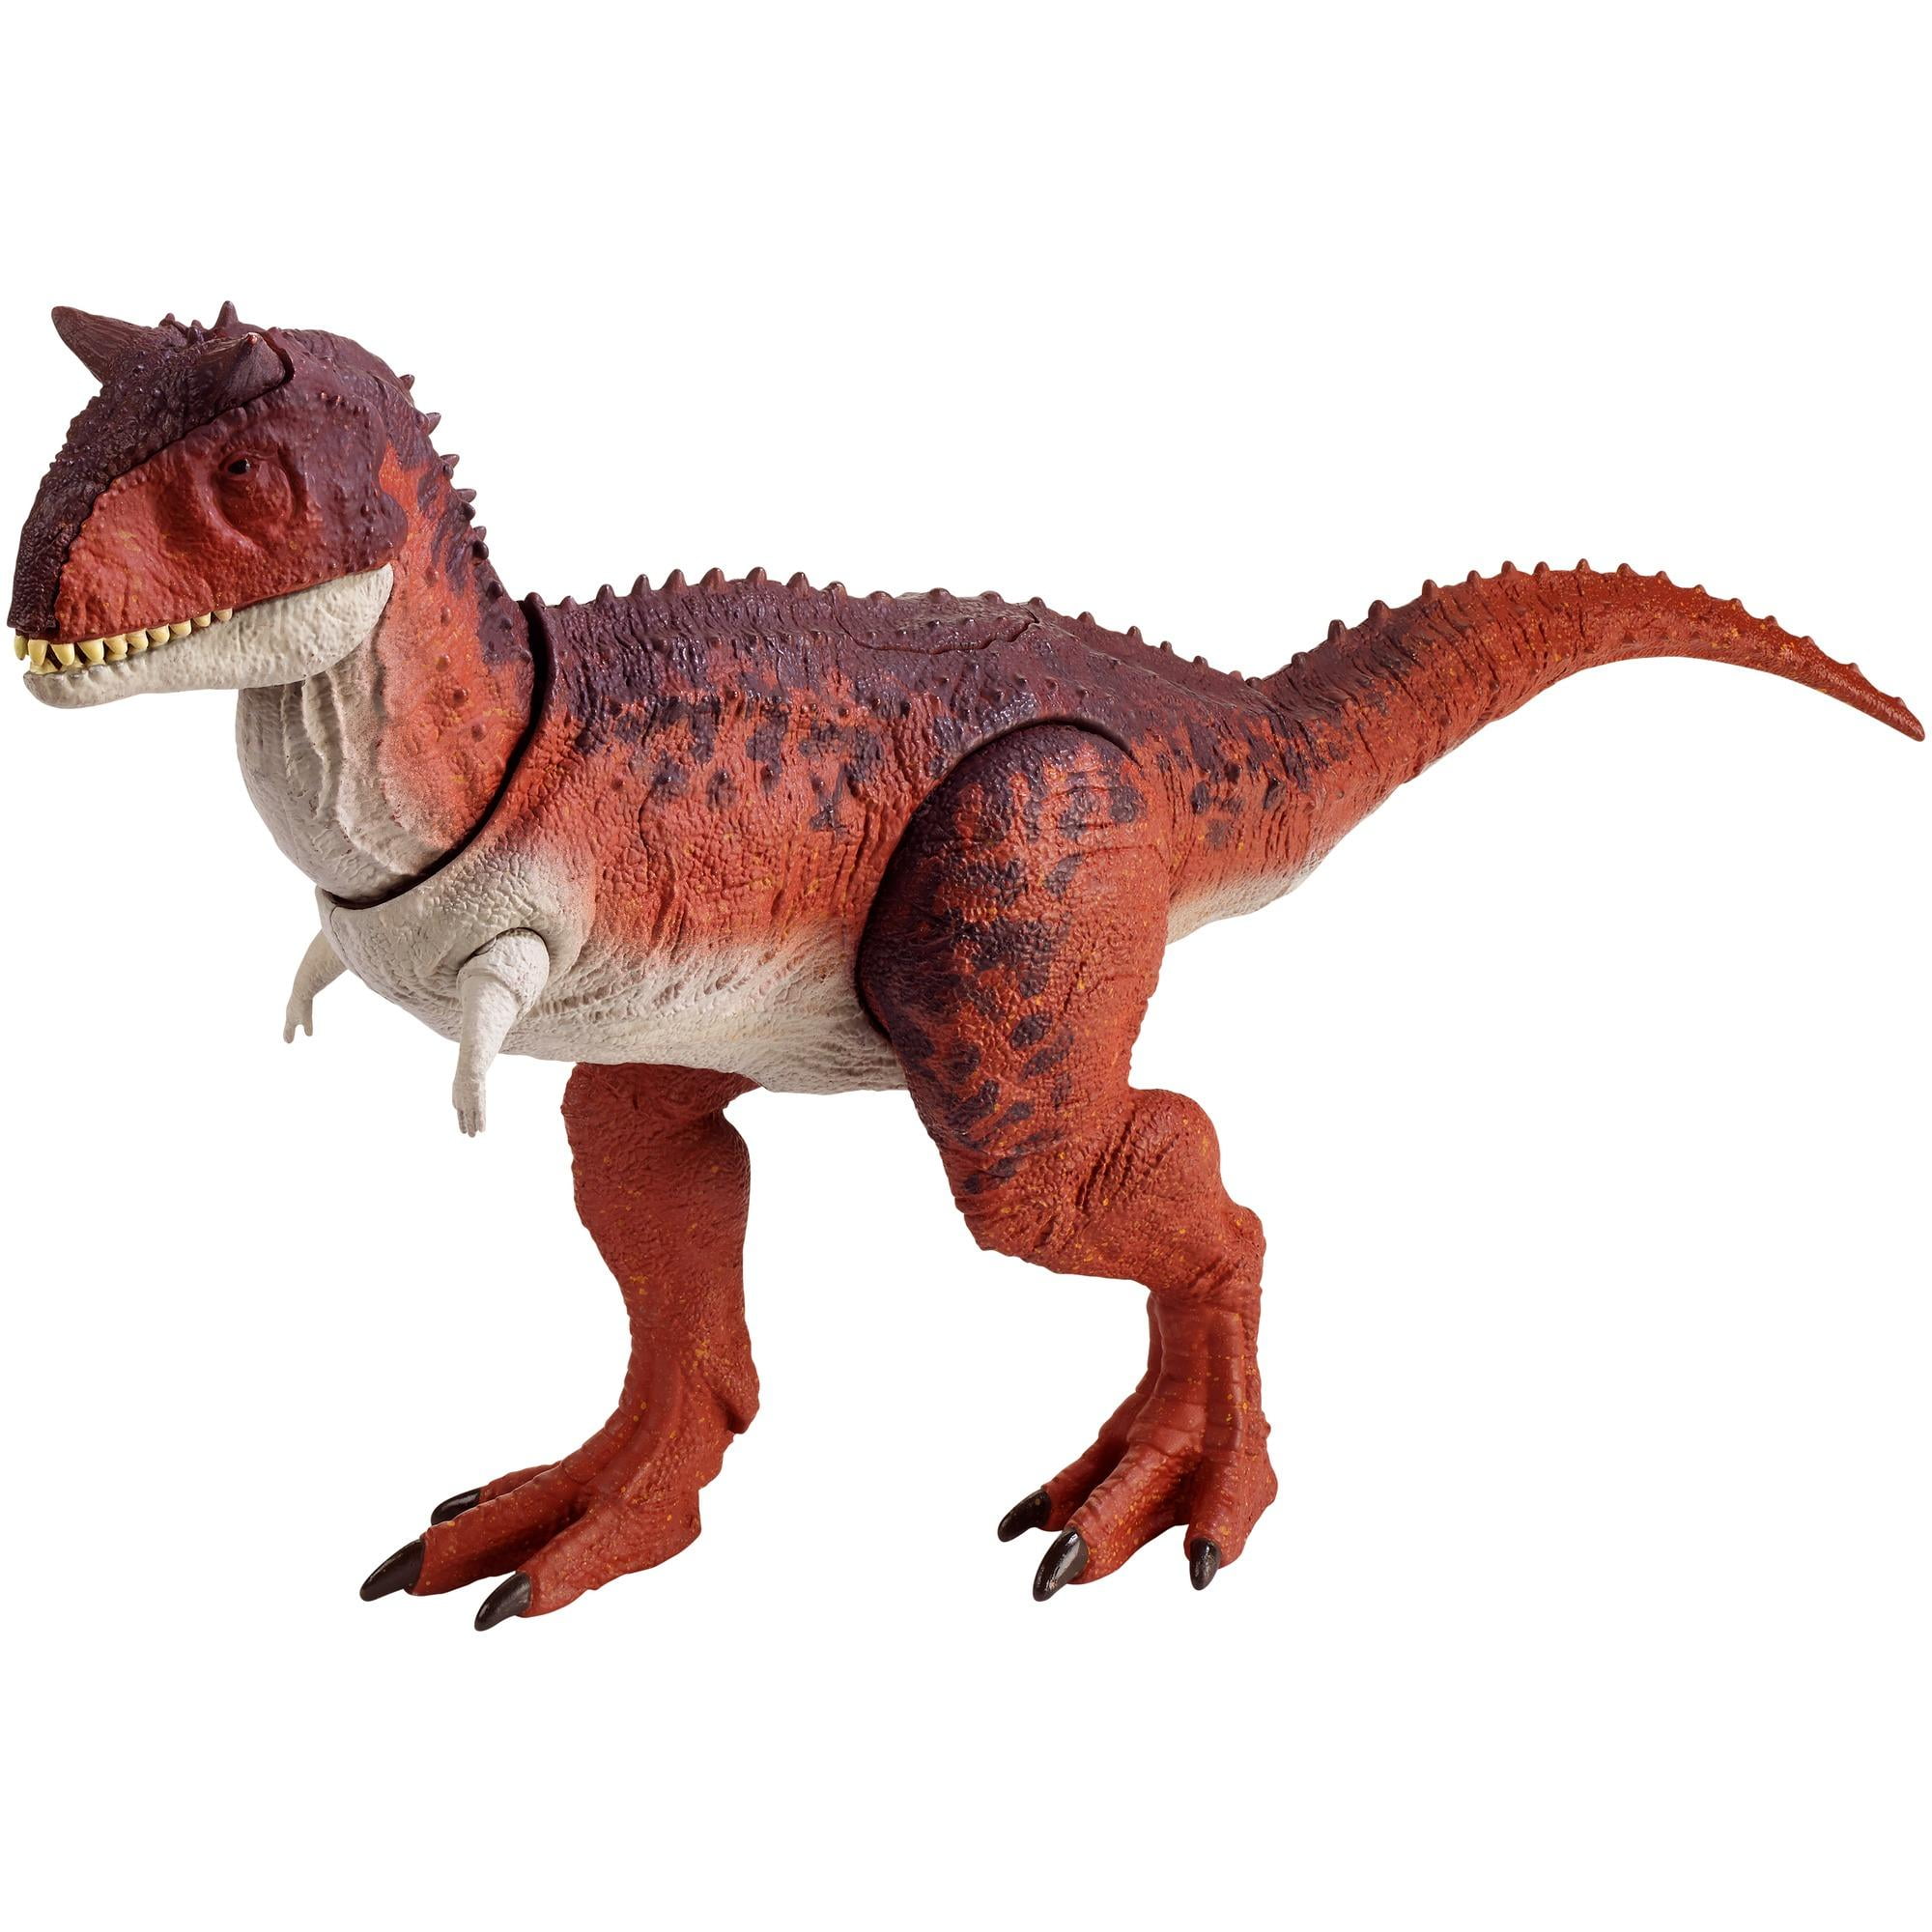 Carnotaurus Dinosaur action figure toy model Jurassic World Park educational toy 